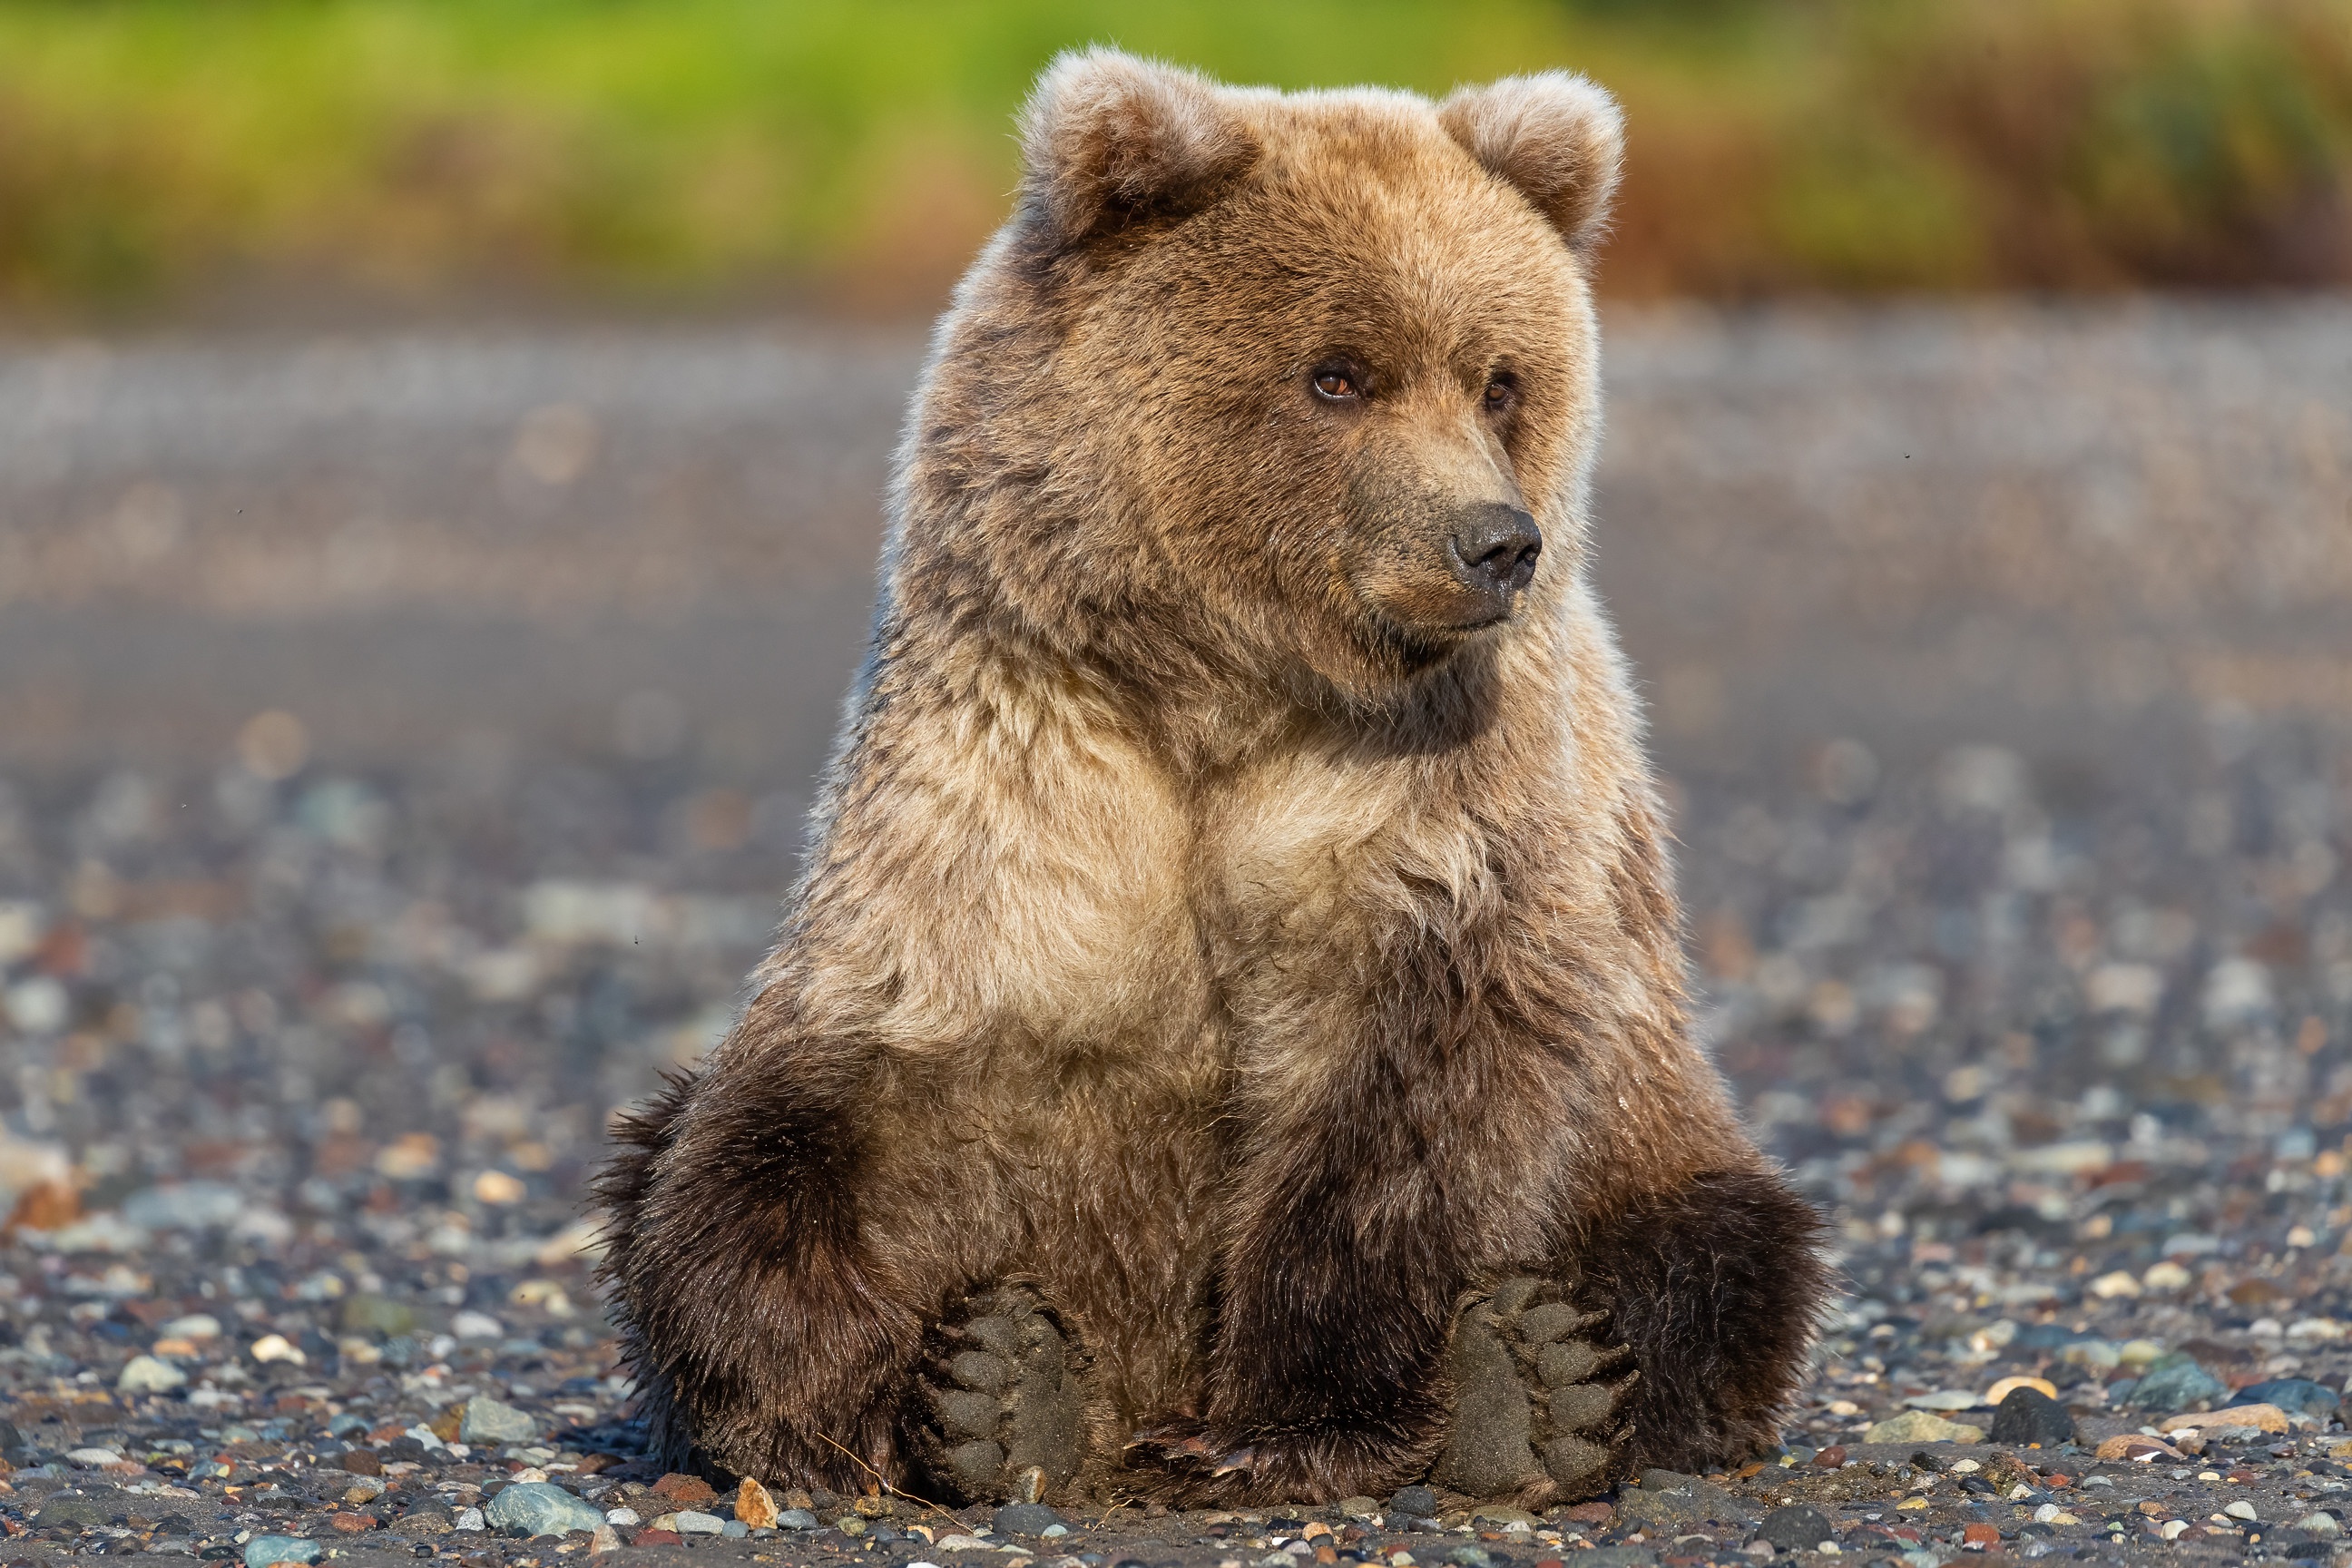 512307 descargar imagen animales, grizzly, oso pardo, osos: fondos de pantalla y protectores de pantalla gratis